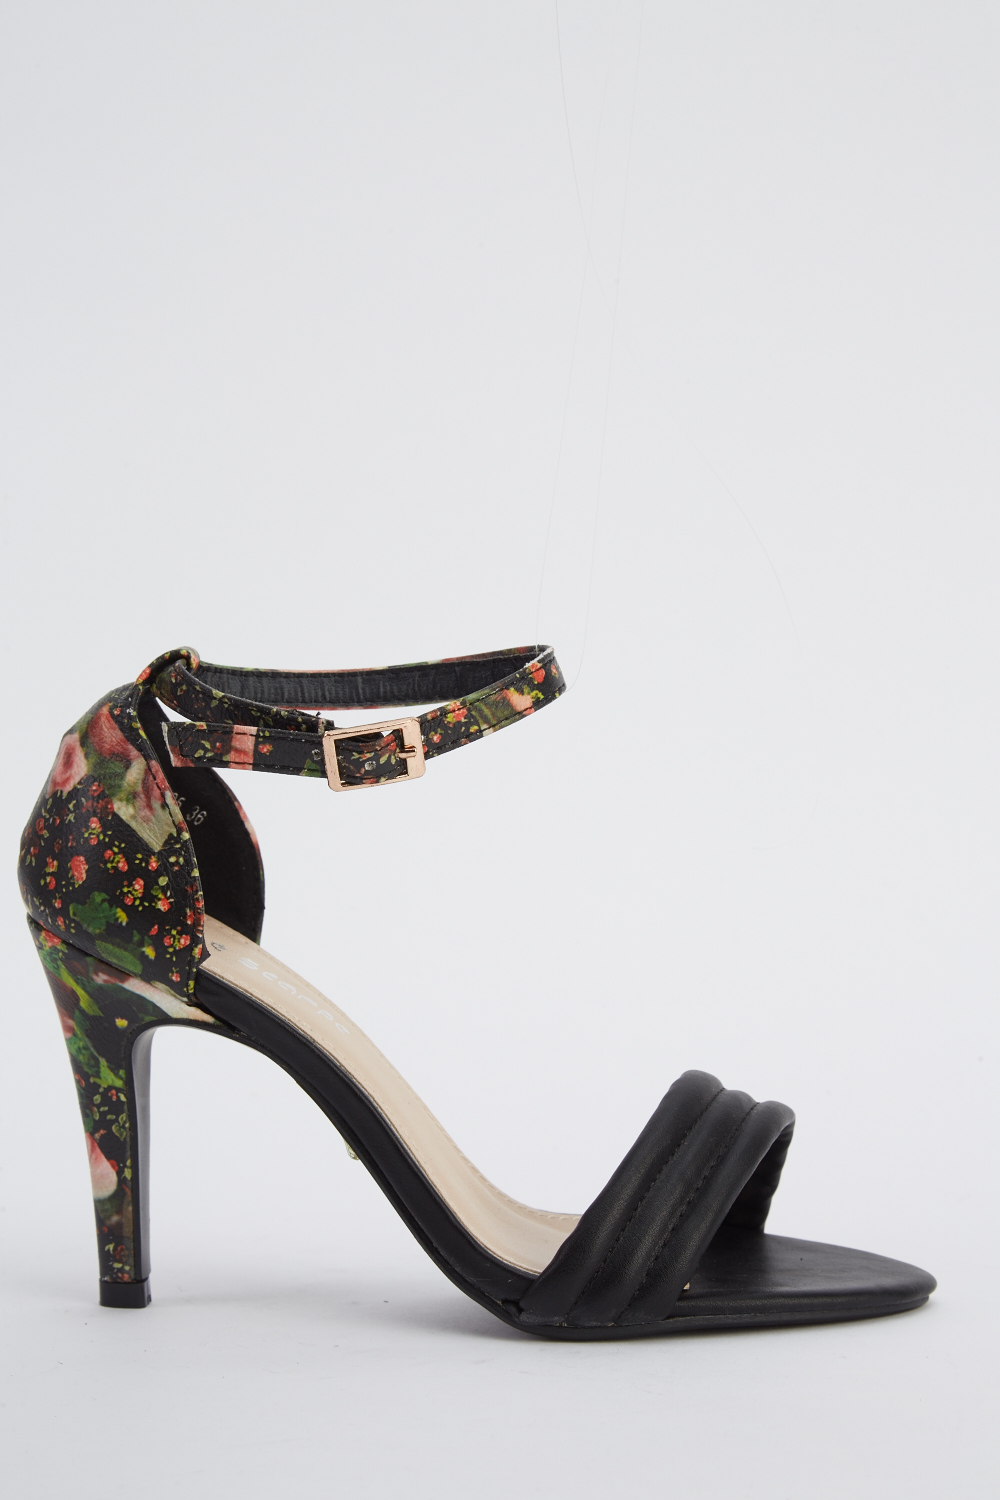 Floral Ankle Strap Heels - Just $6